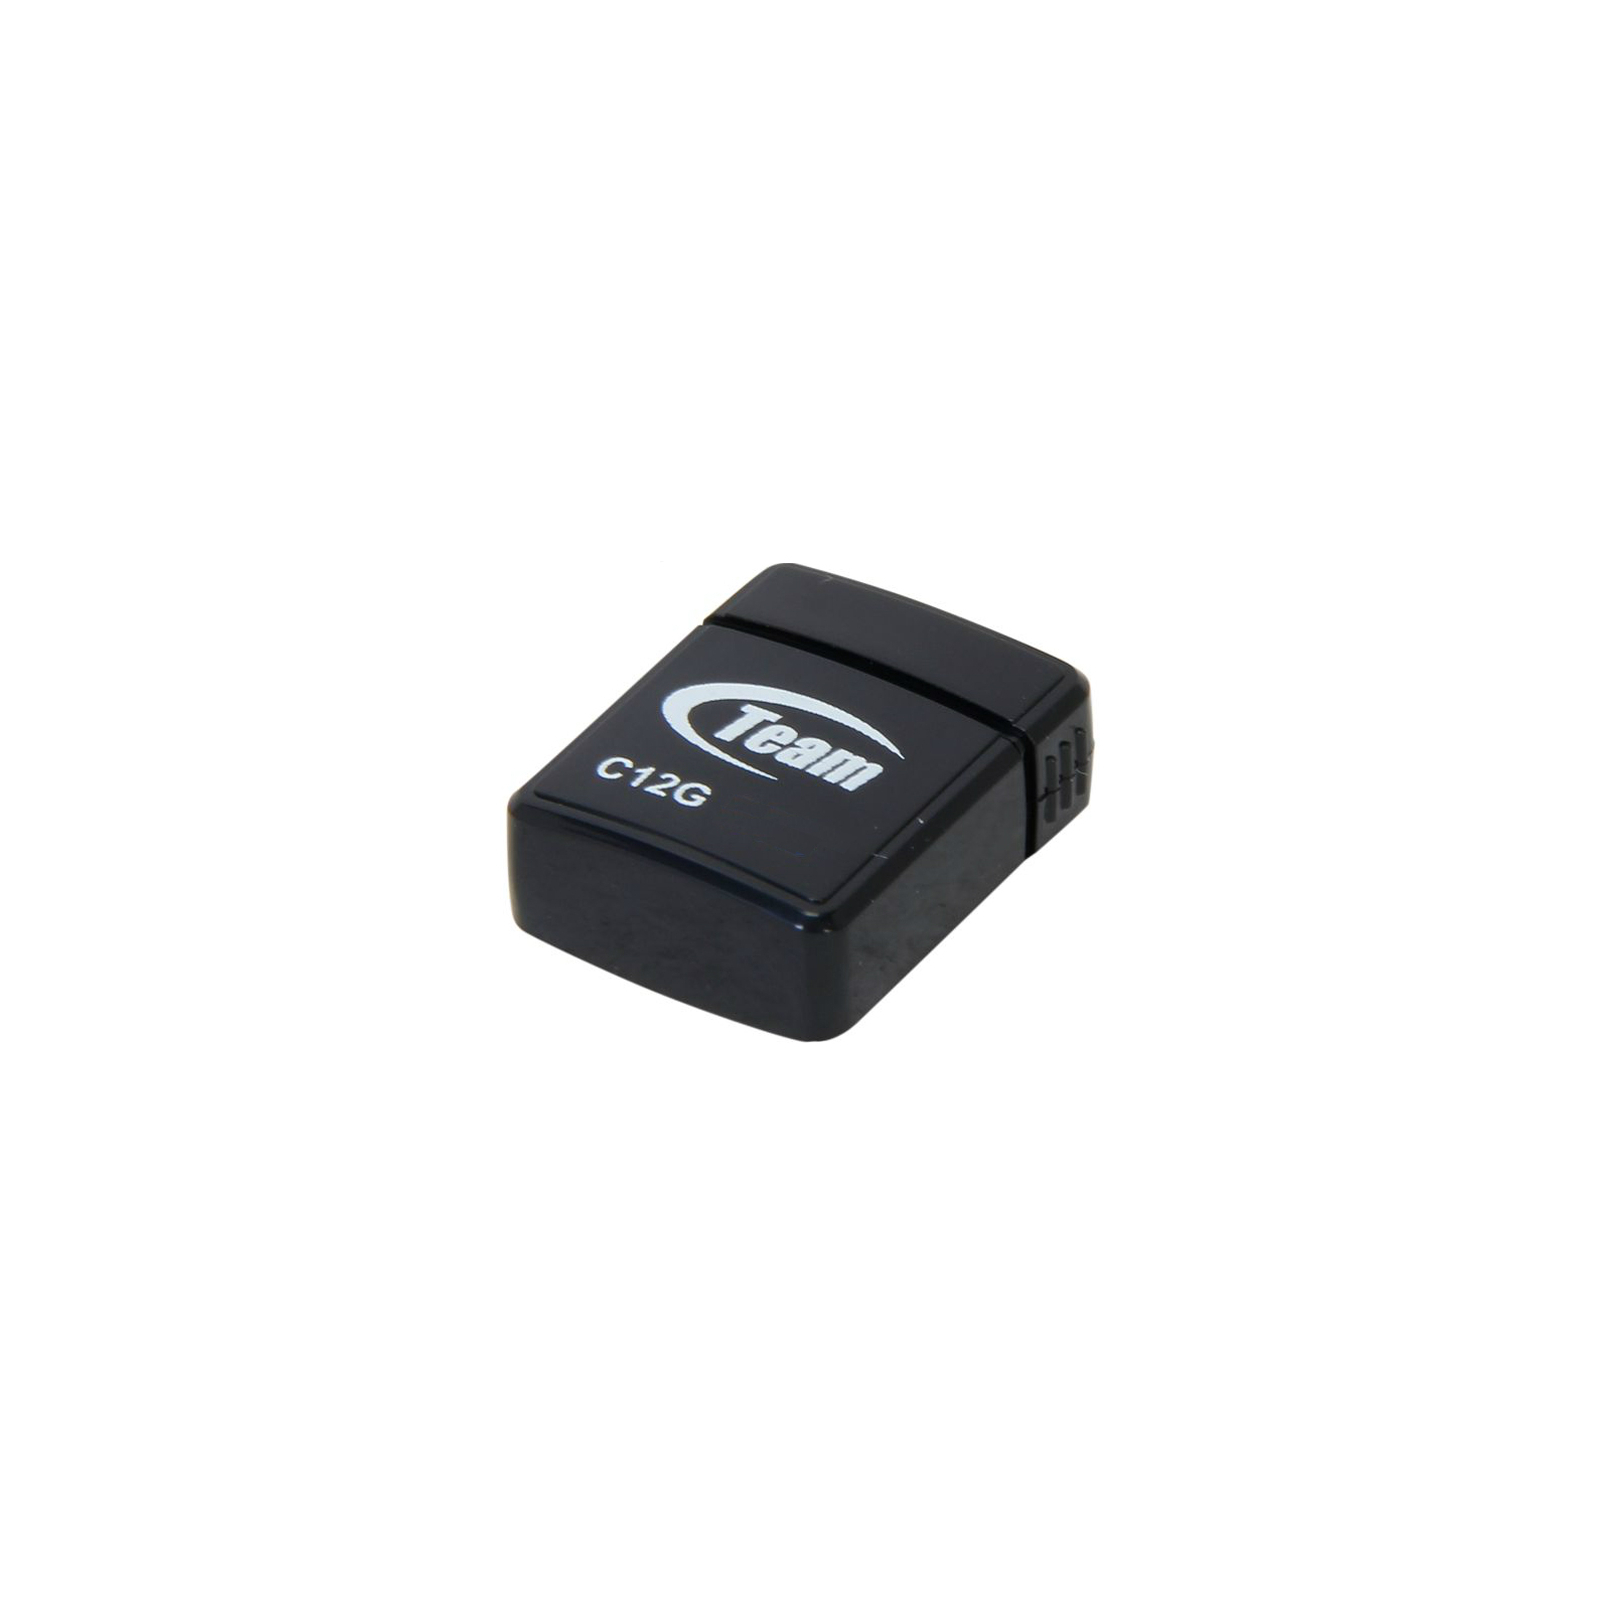 USB флеш накопитель Team 16GB C12G Black USB 2.0 (TC12G16GB01) изображение 2